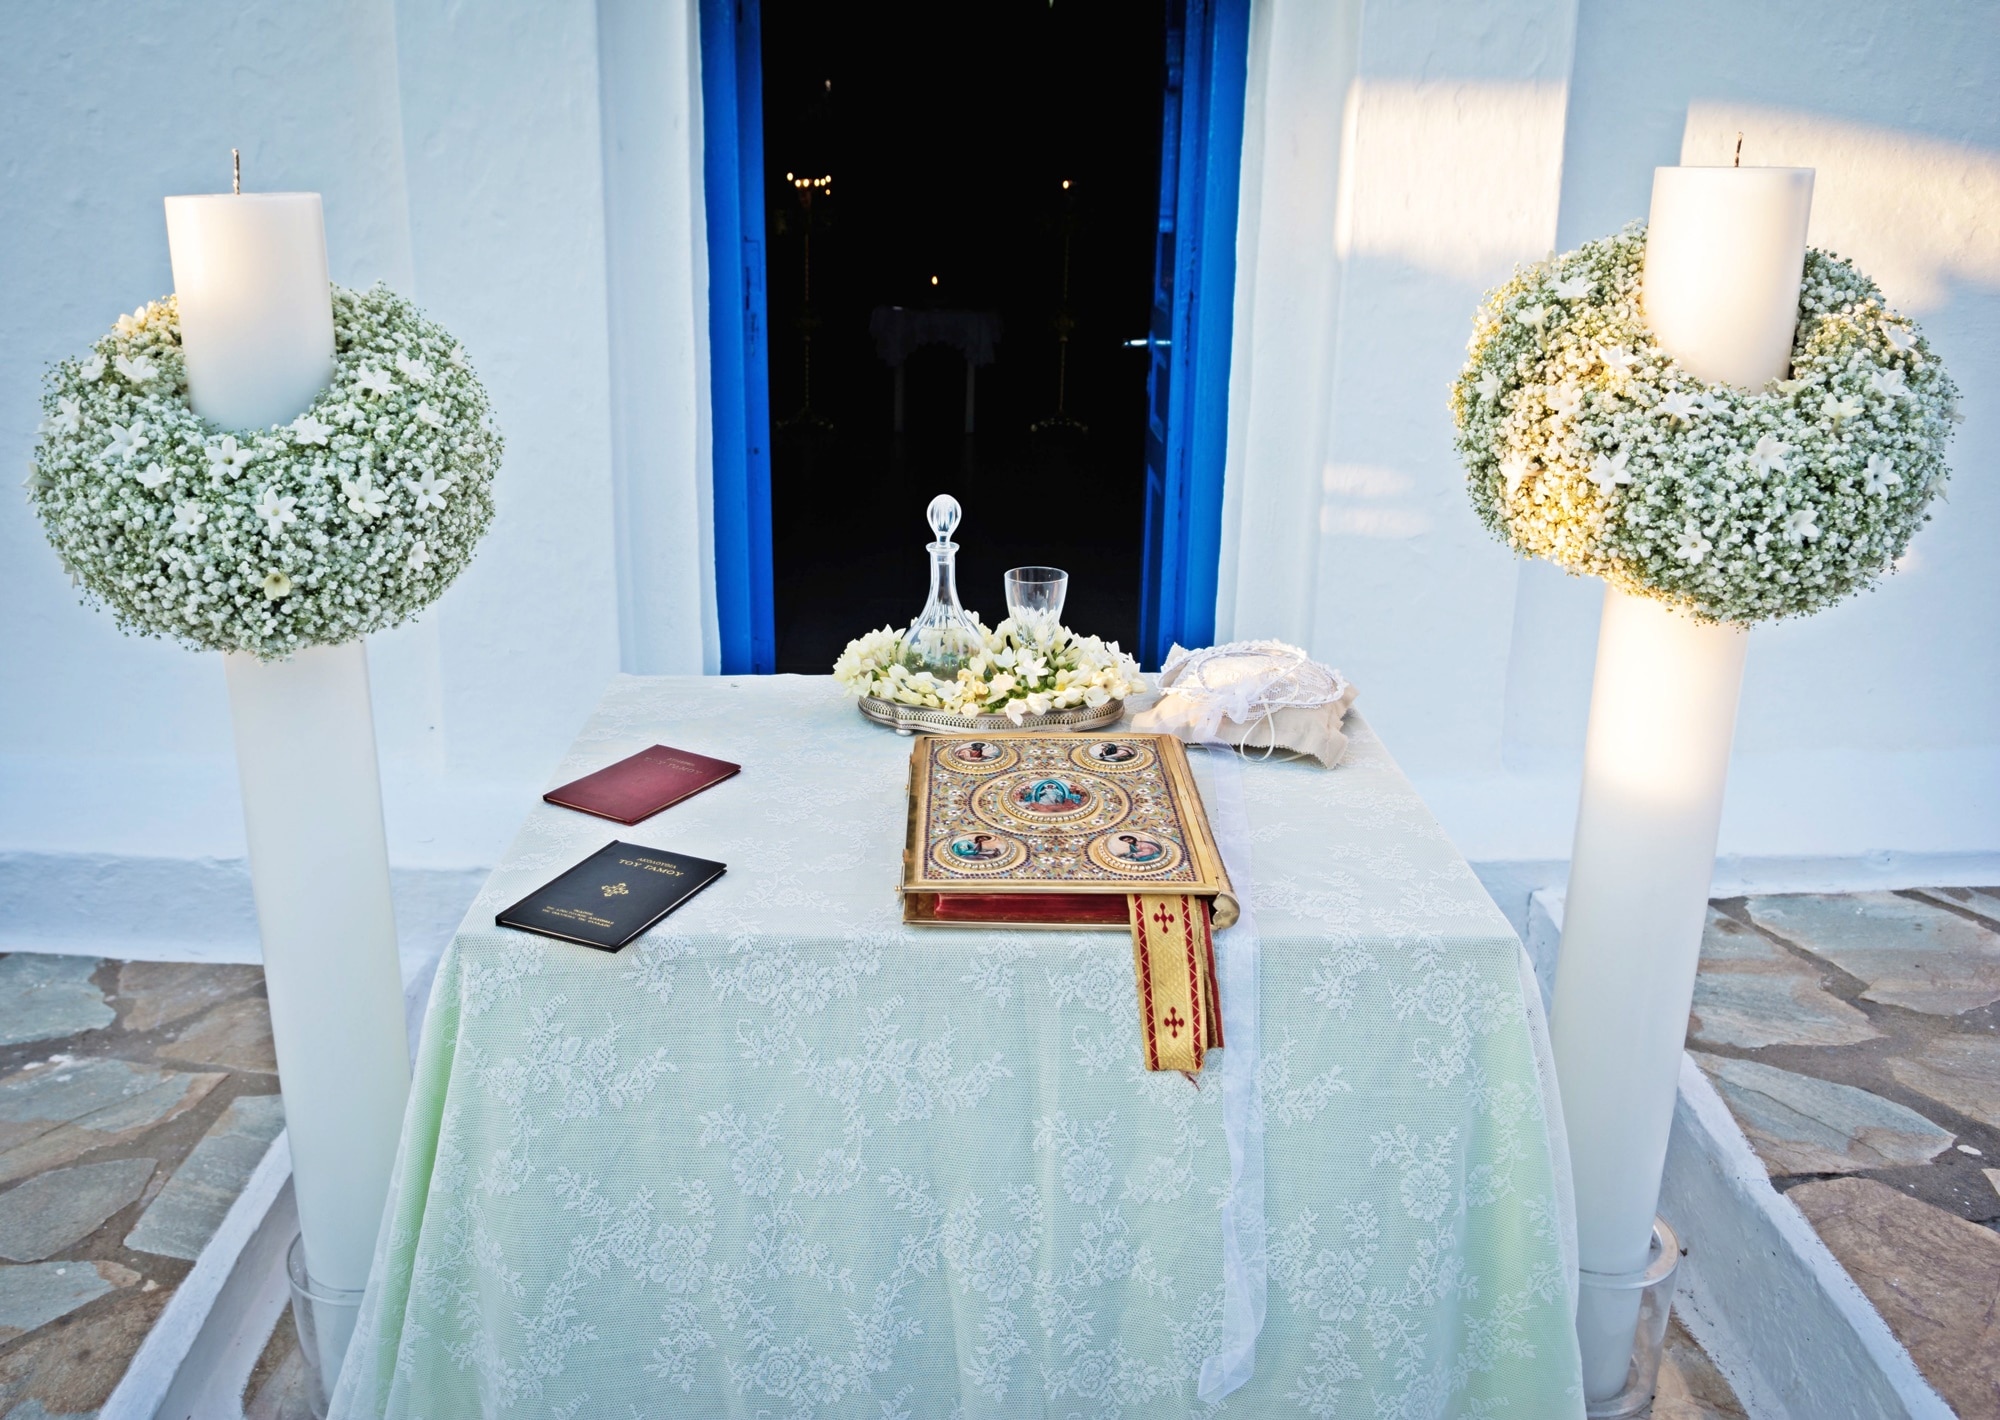 A wedding that smelled like jasmine